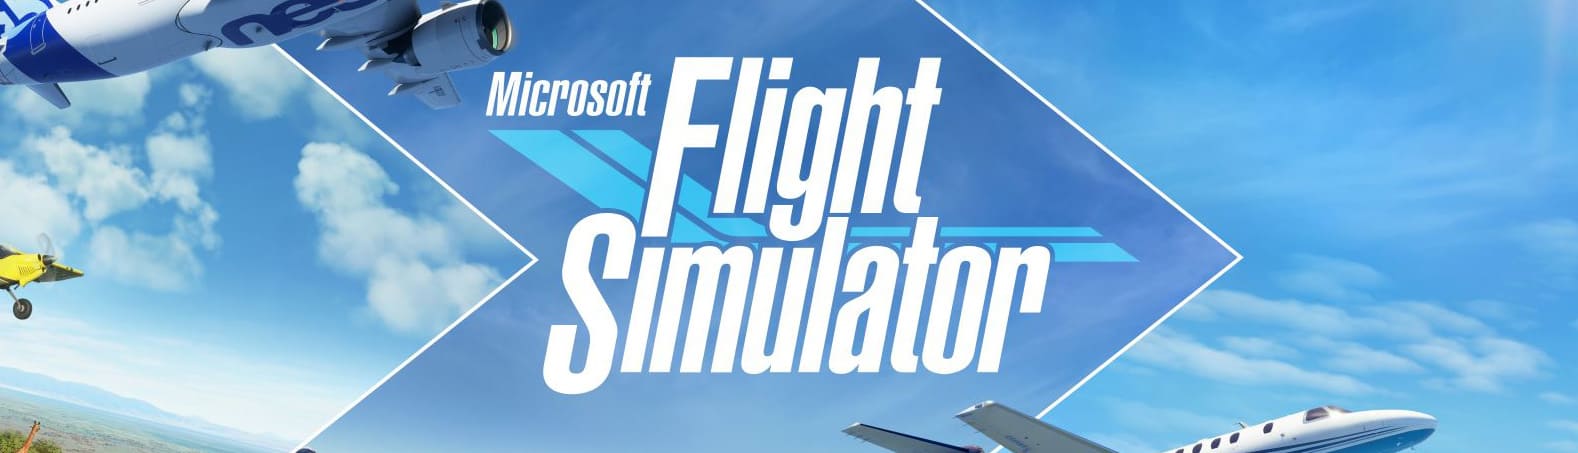 How to install Microsoft Flight Simulator on Steam – Microsoft